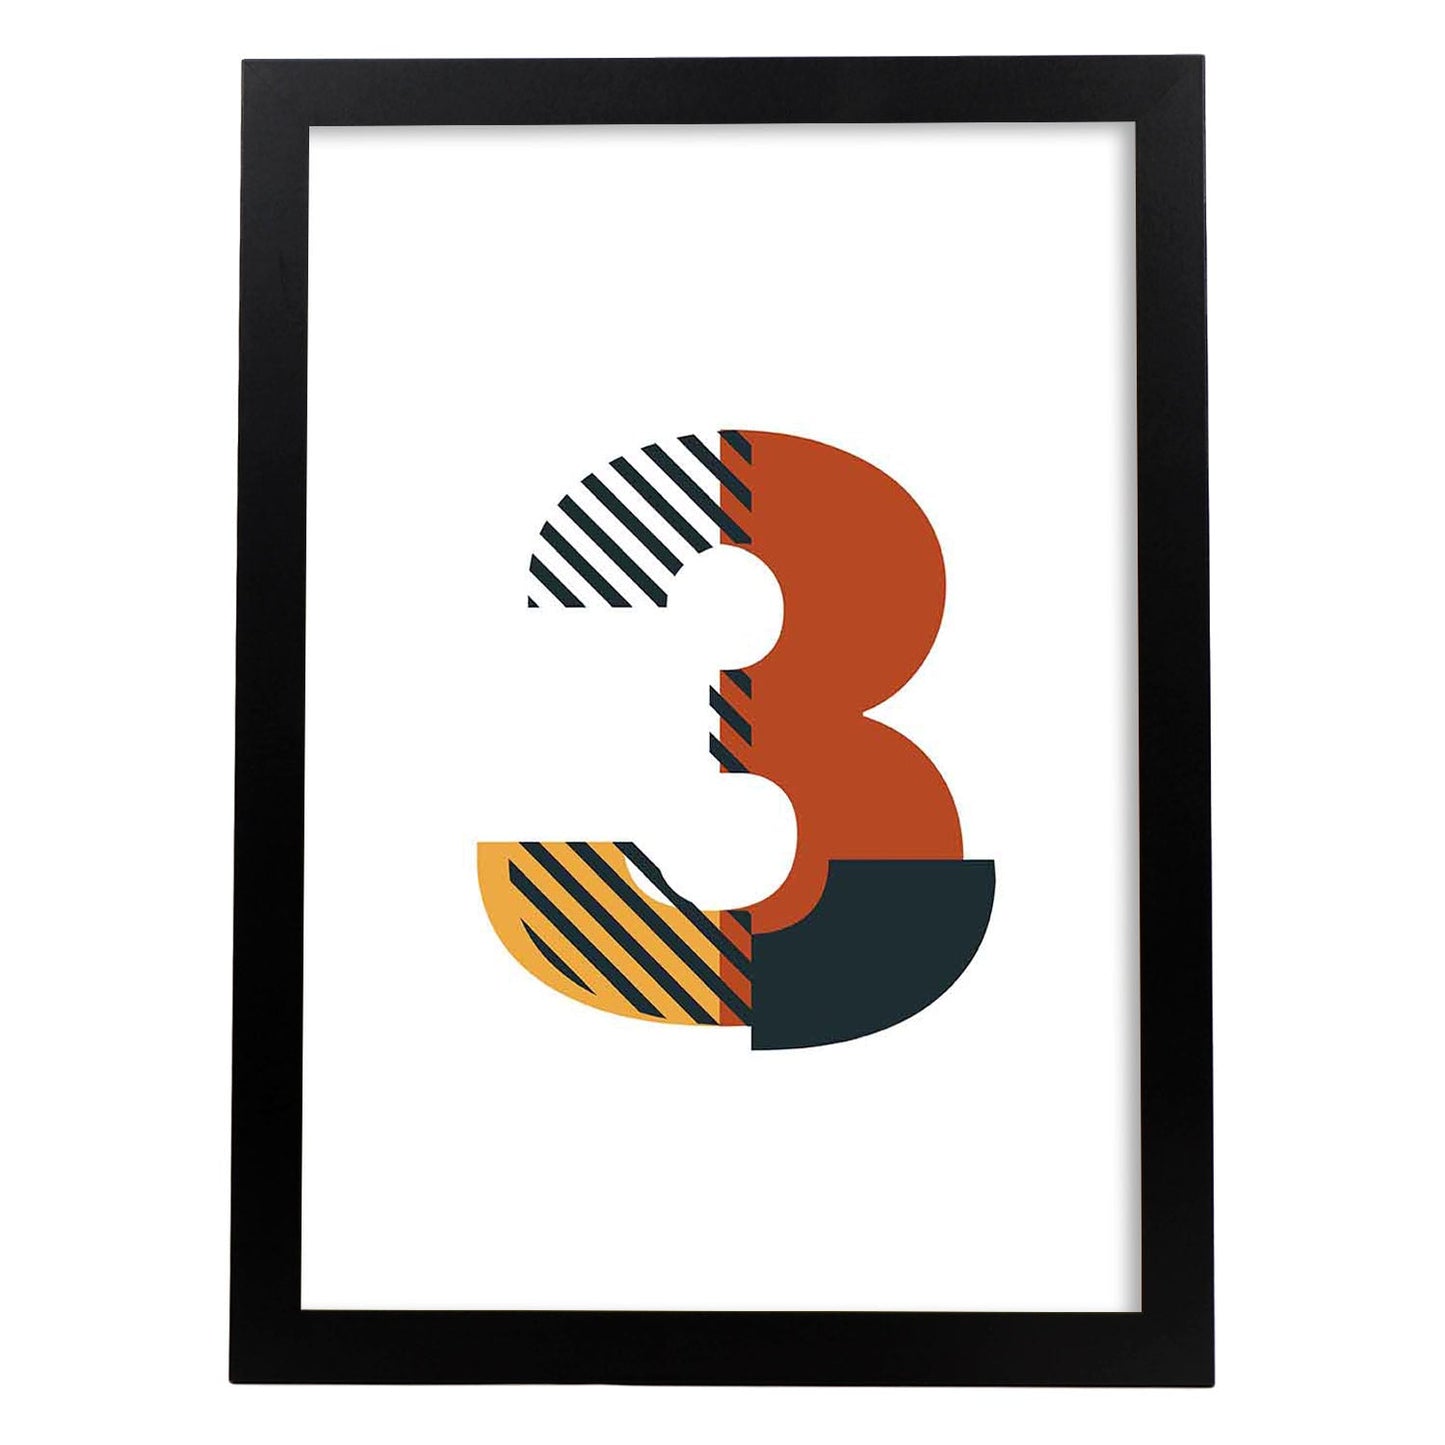 Poster de número 3. Lámina estilo Geometria con imágenes del alfabeto.-Artwork-Nacnic-A4-Marco Negro-Nacnic Estudio SL